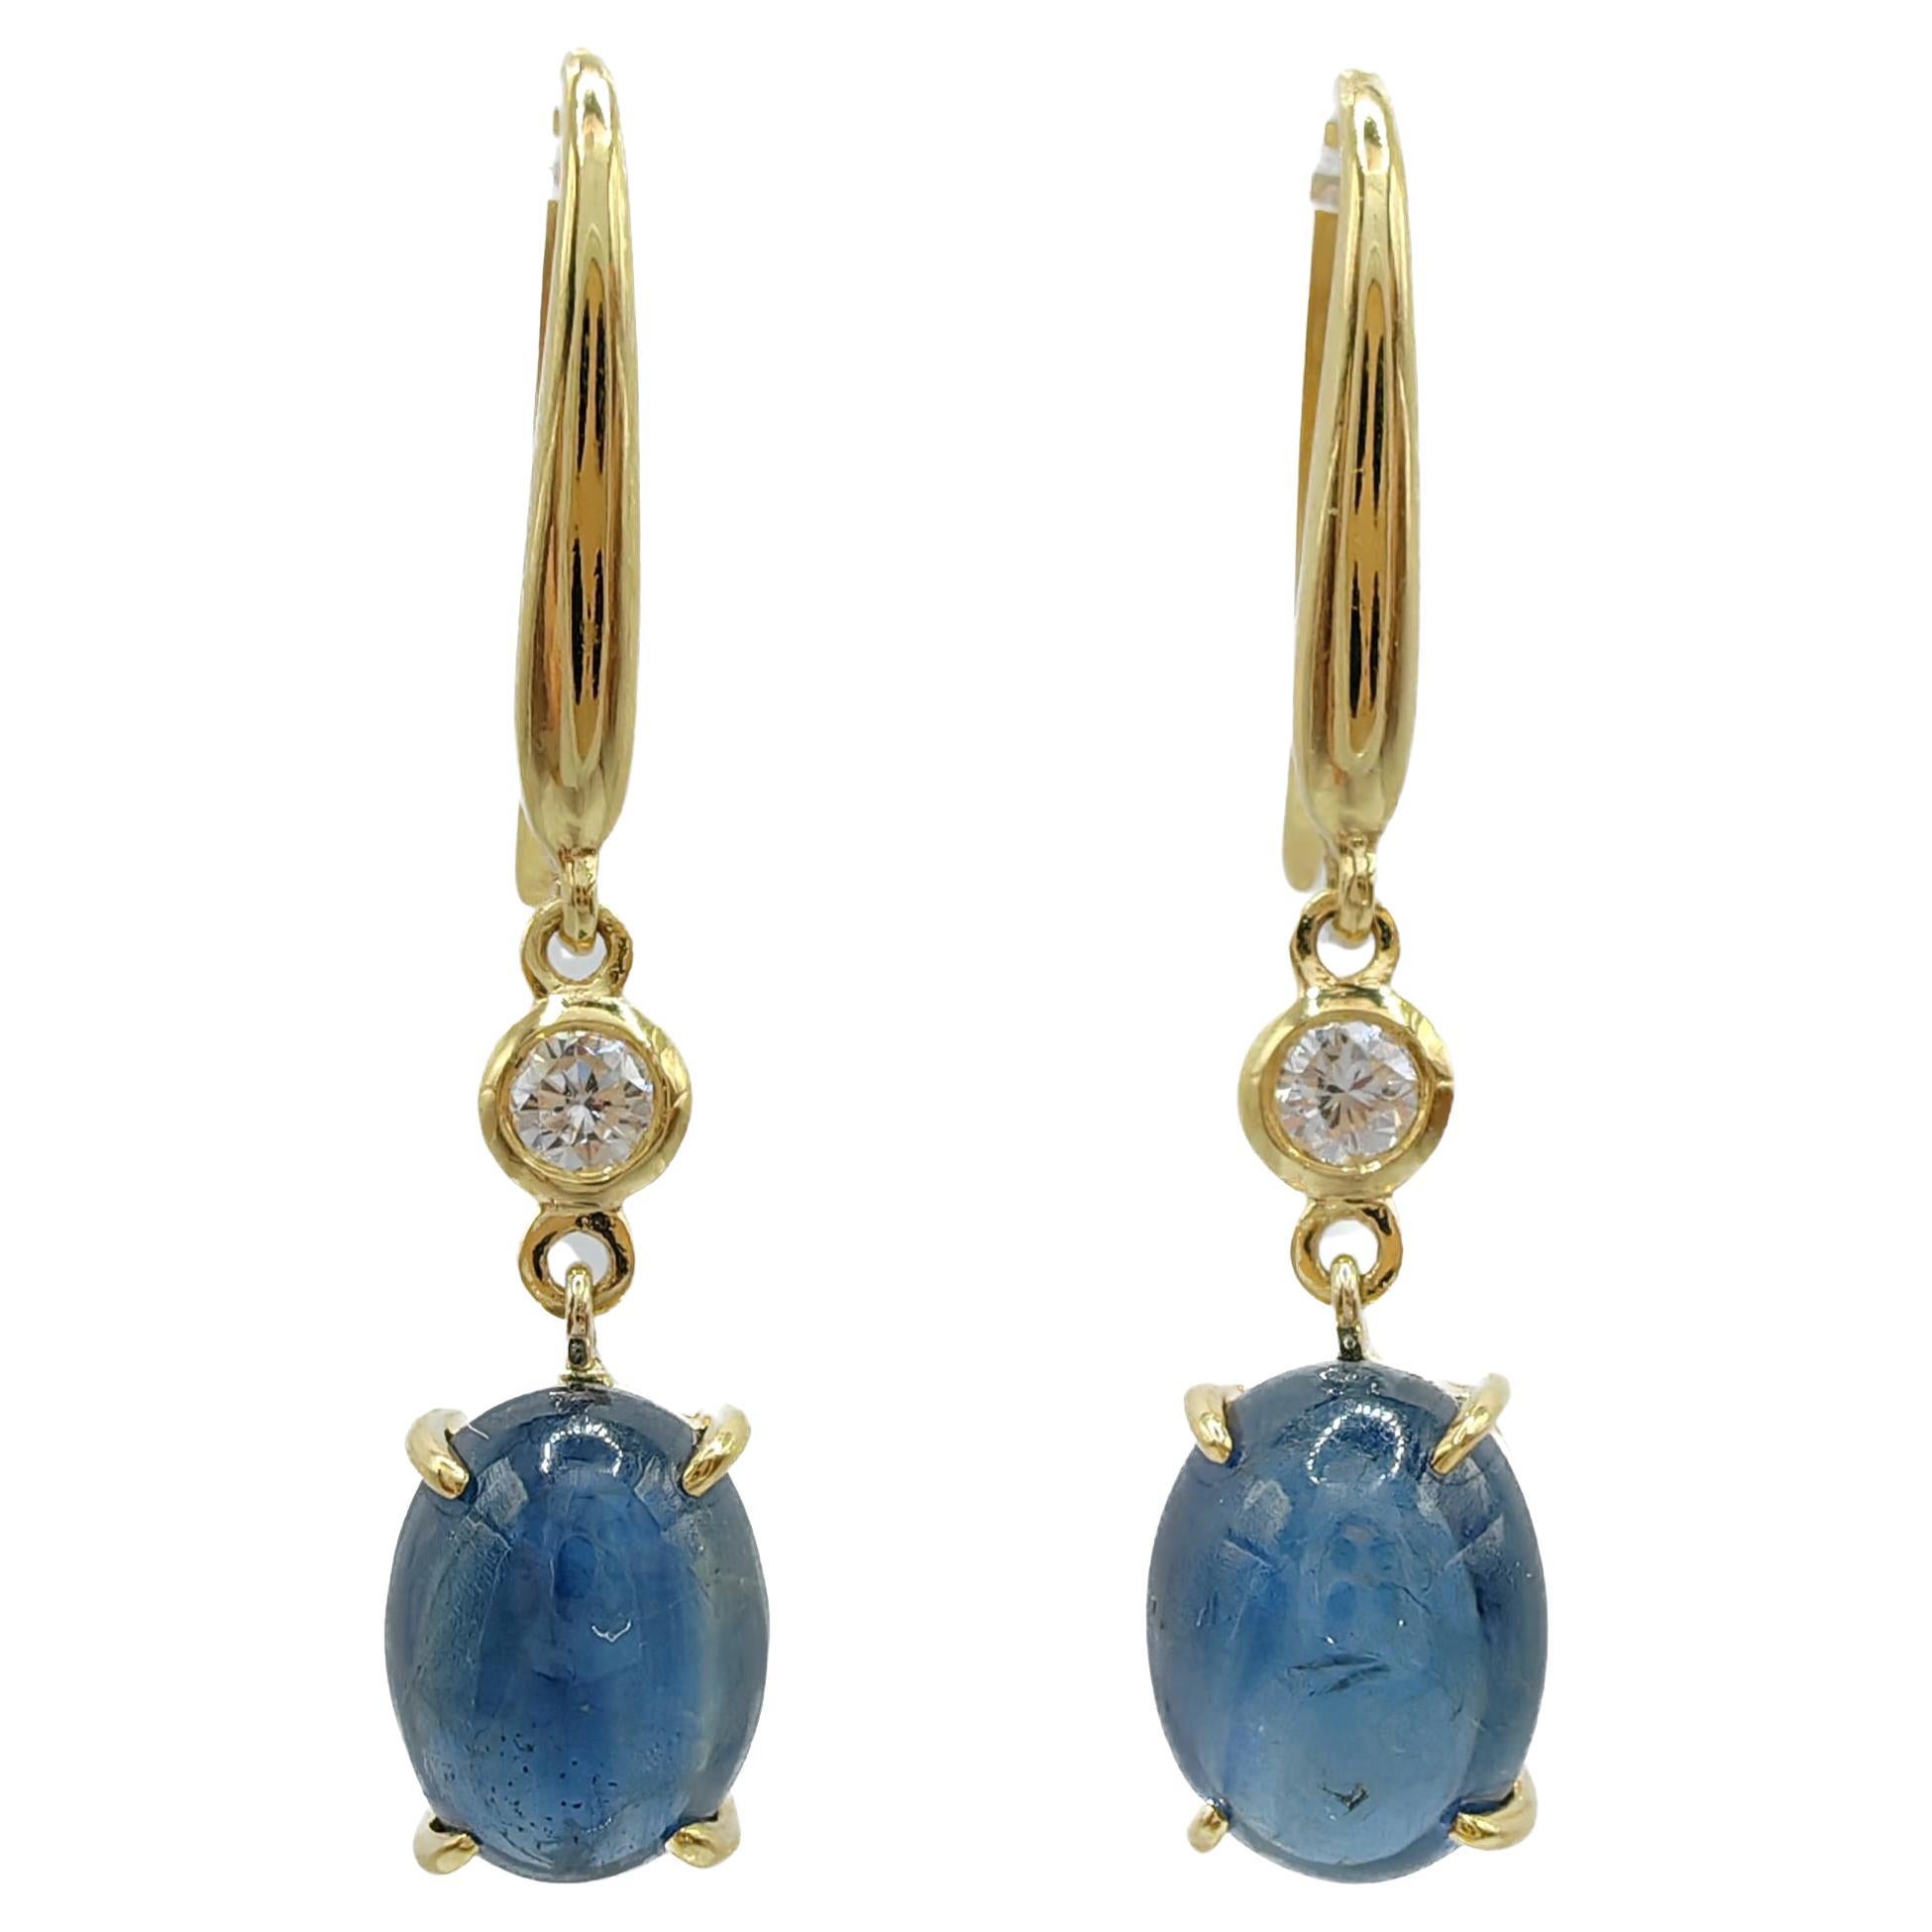 6.13ct Cabochon Blue Sapphire Diamond Dangling Earrings in 18K Yellow Gold